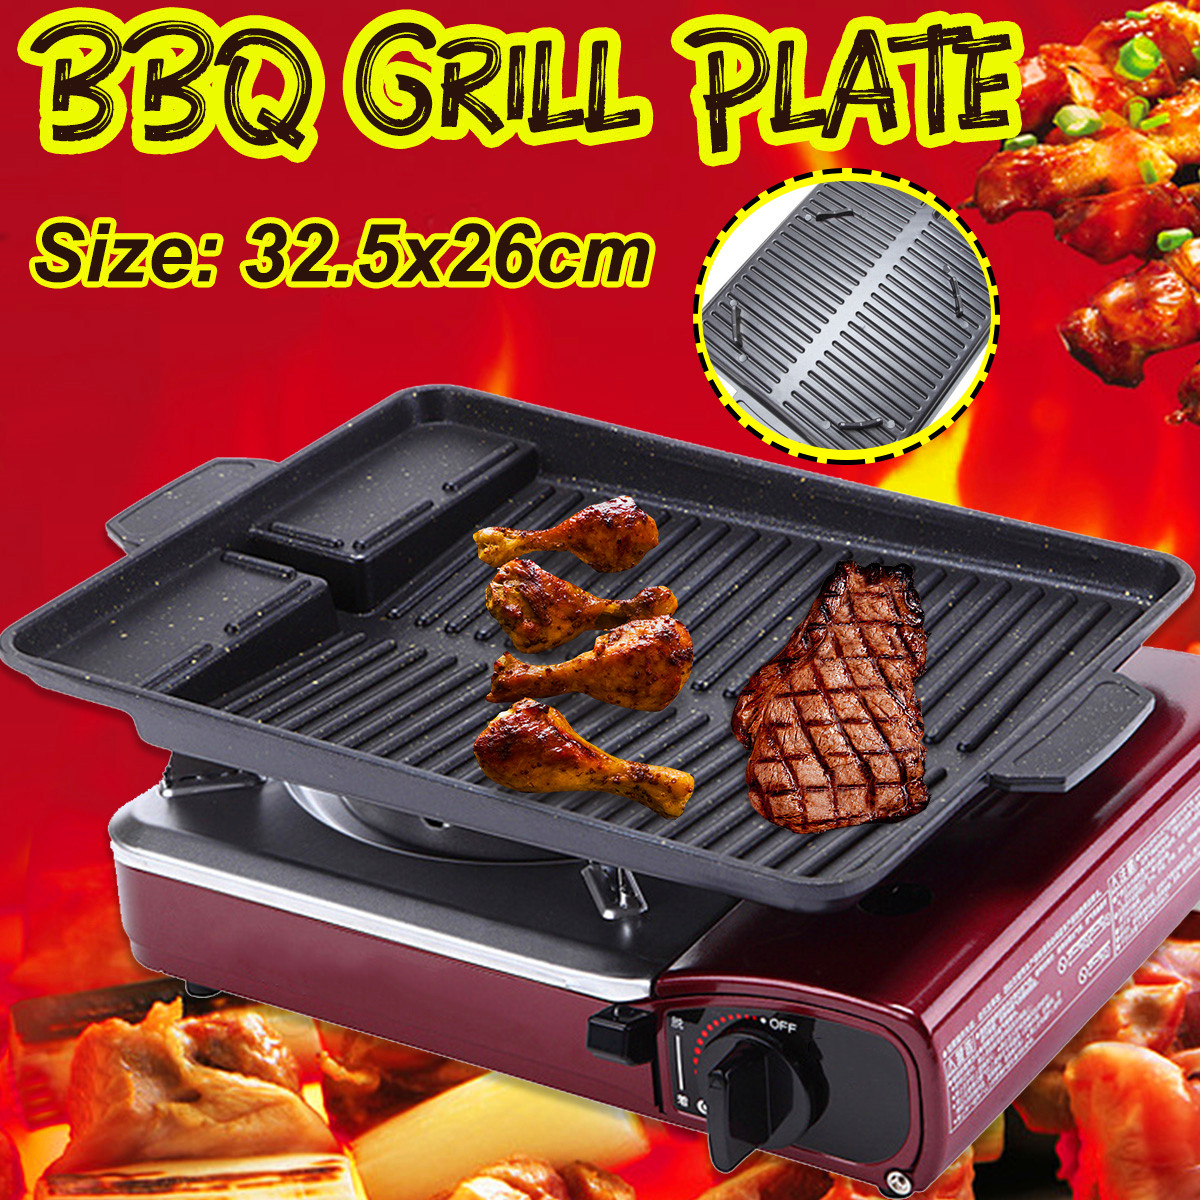 SEAROCK-F50434-BBQ-Grill-Tray-Cooking-Plate-Maifan-Stone-Coating-Outdoor-325264CM-1793008-1